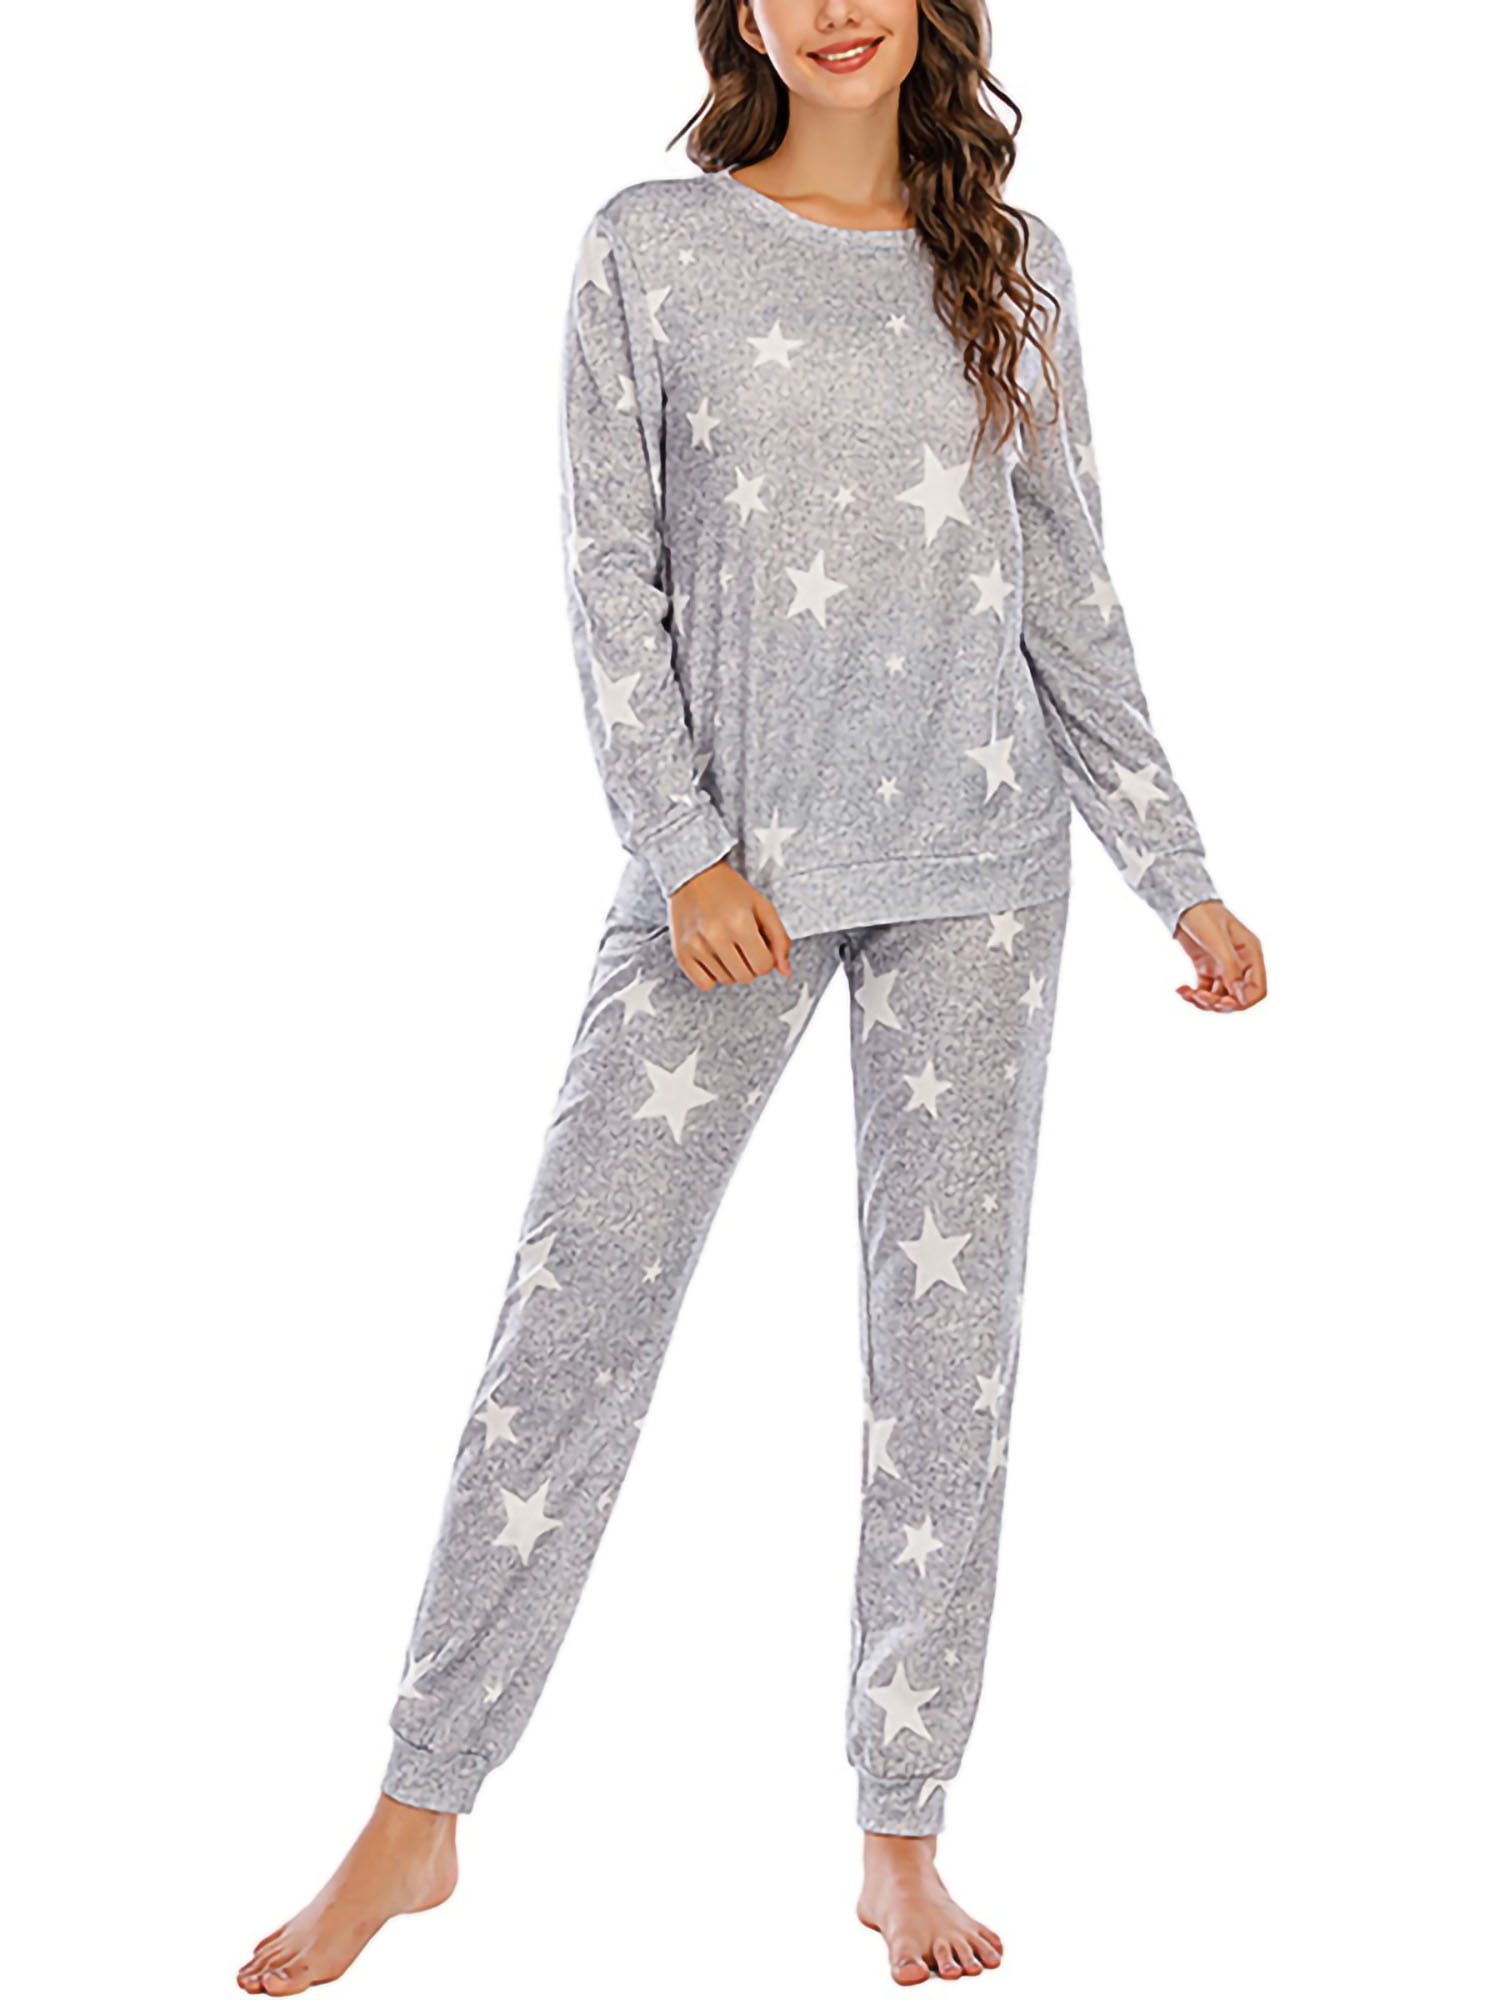 LADIES Dots And Dreams Character Twosies 2pc Pajama Set Grey Bunny